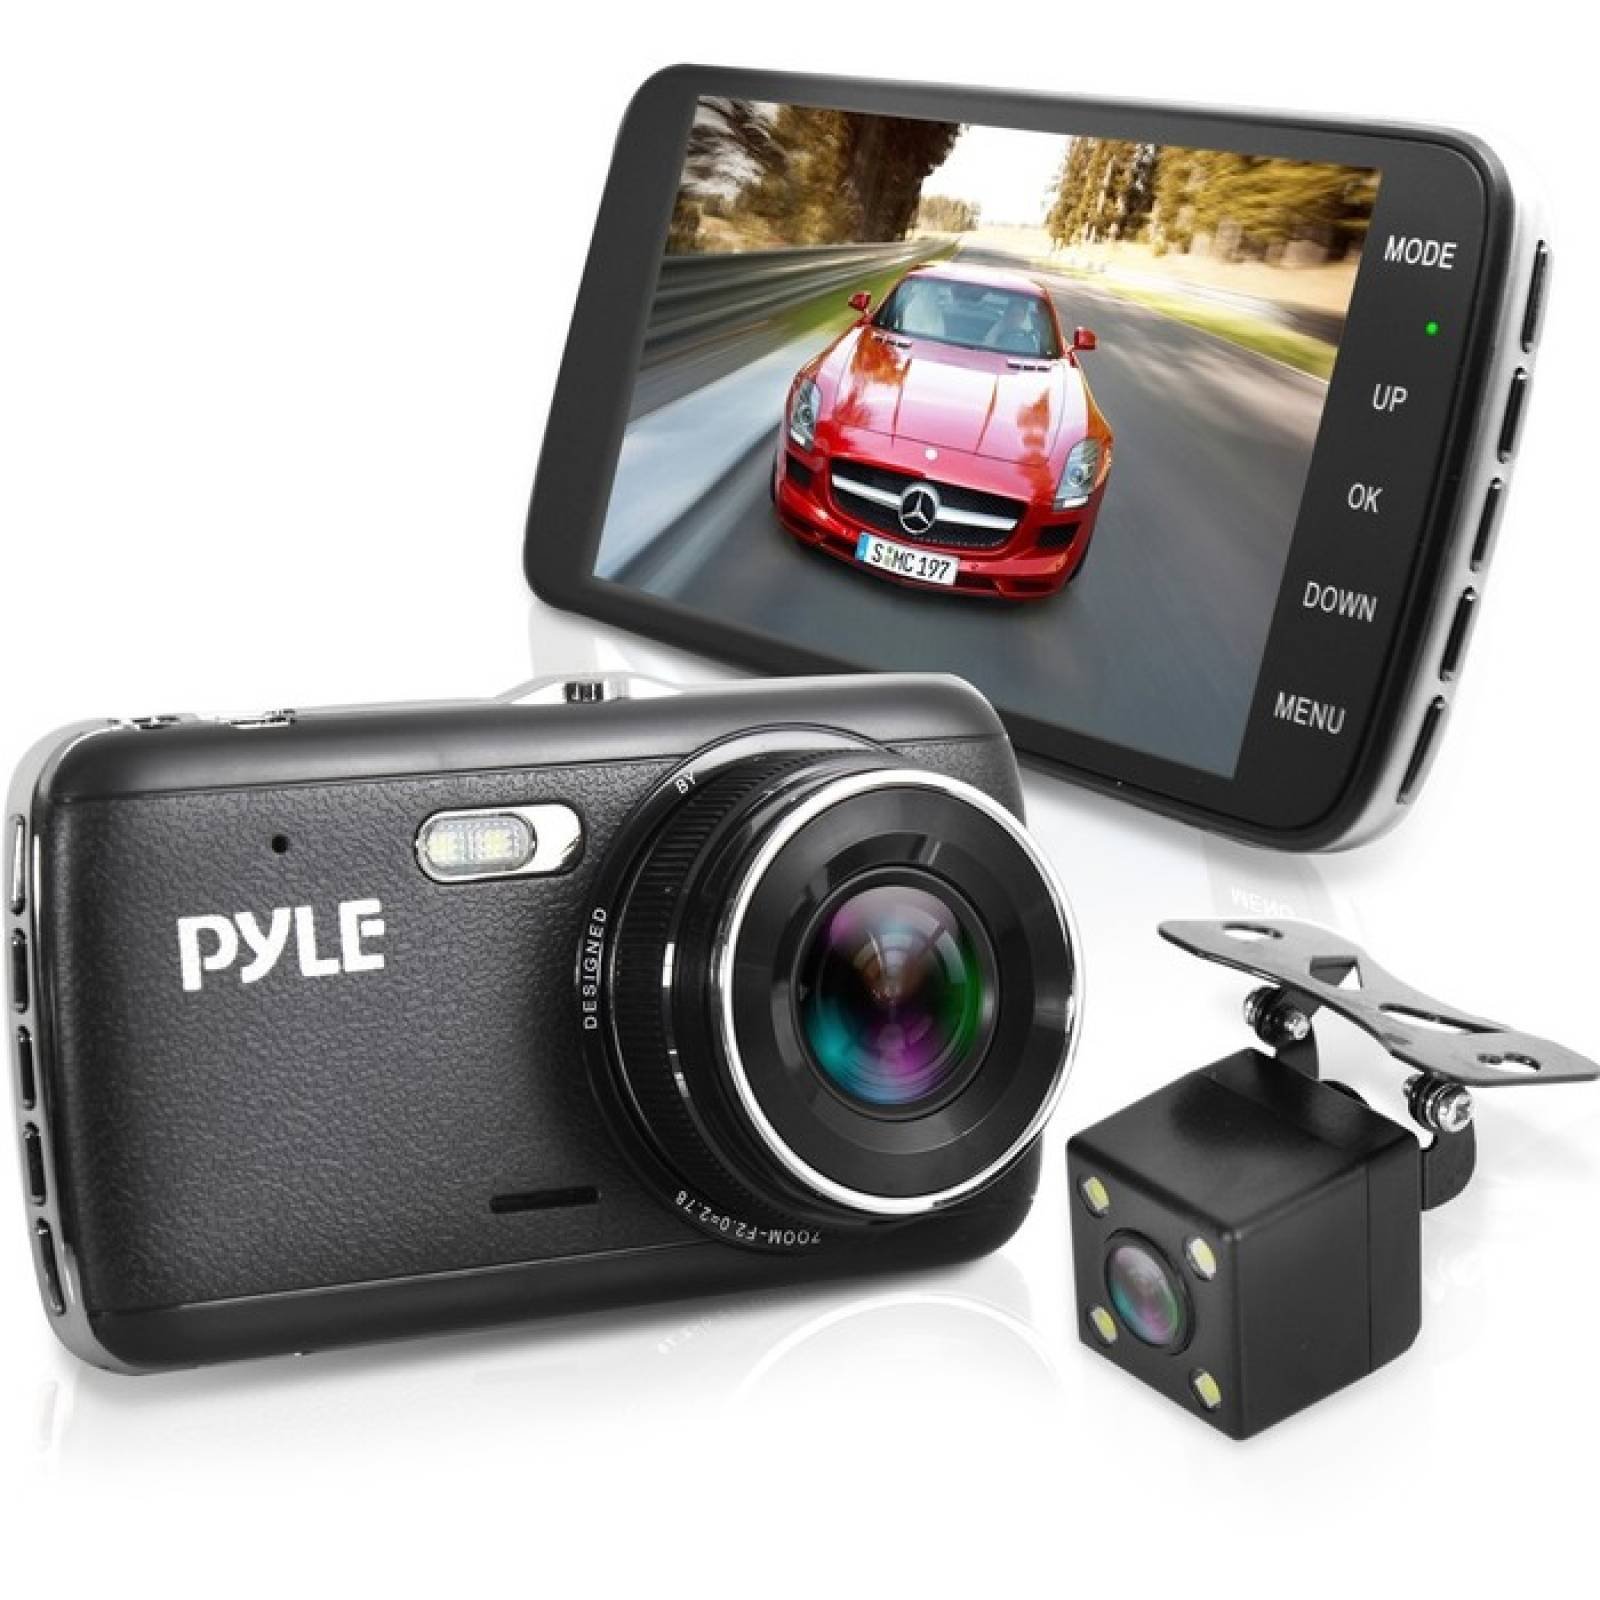 Pyle Vehicle DVR Dash Cam Kit  Sistema de grabacin de video de doble cmara con Full HD 1080p